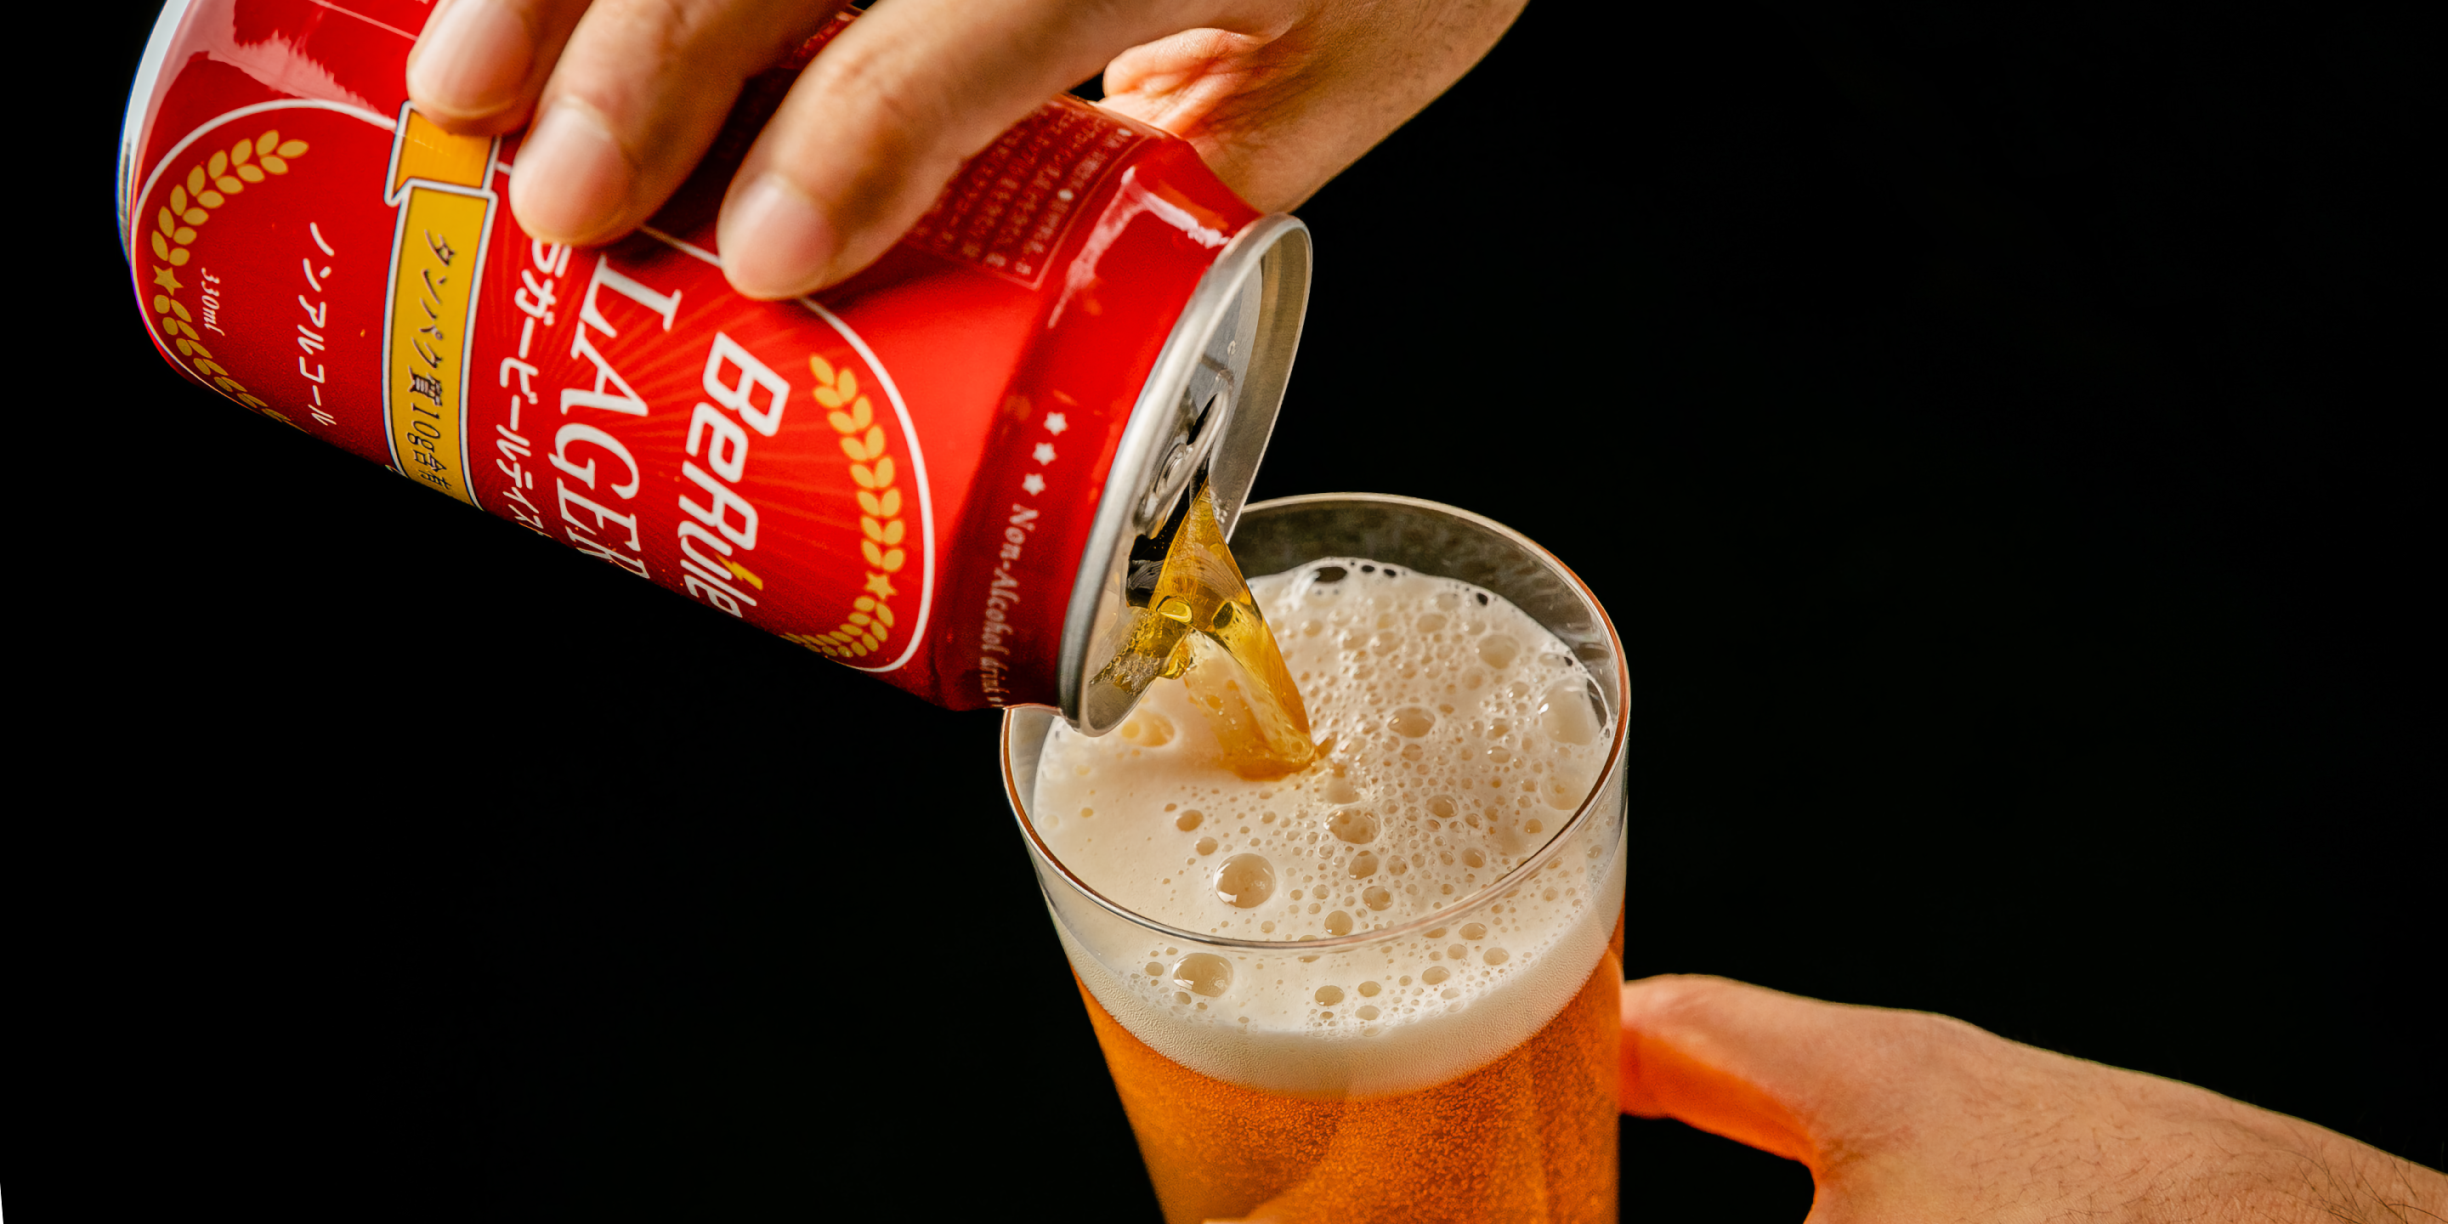 BeRuleのプロテイン入りノンアルコールビール・カクテルは、特別な工程を経て、今までのプロテインにはあまりなかった、クリアで、口当たりがサラサラとした微炭酸のスッキリとした食感を実現しました！